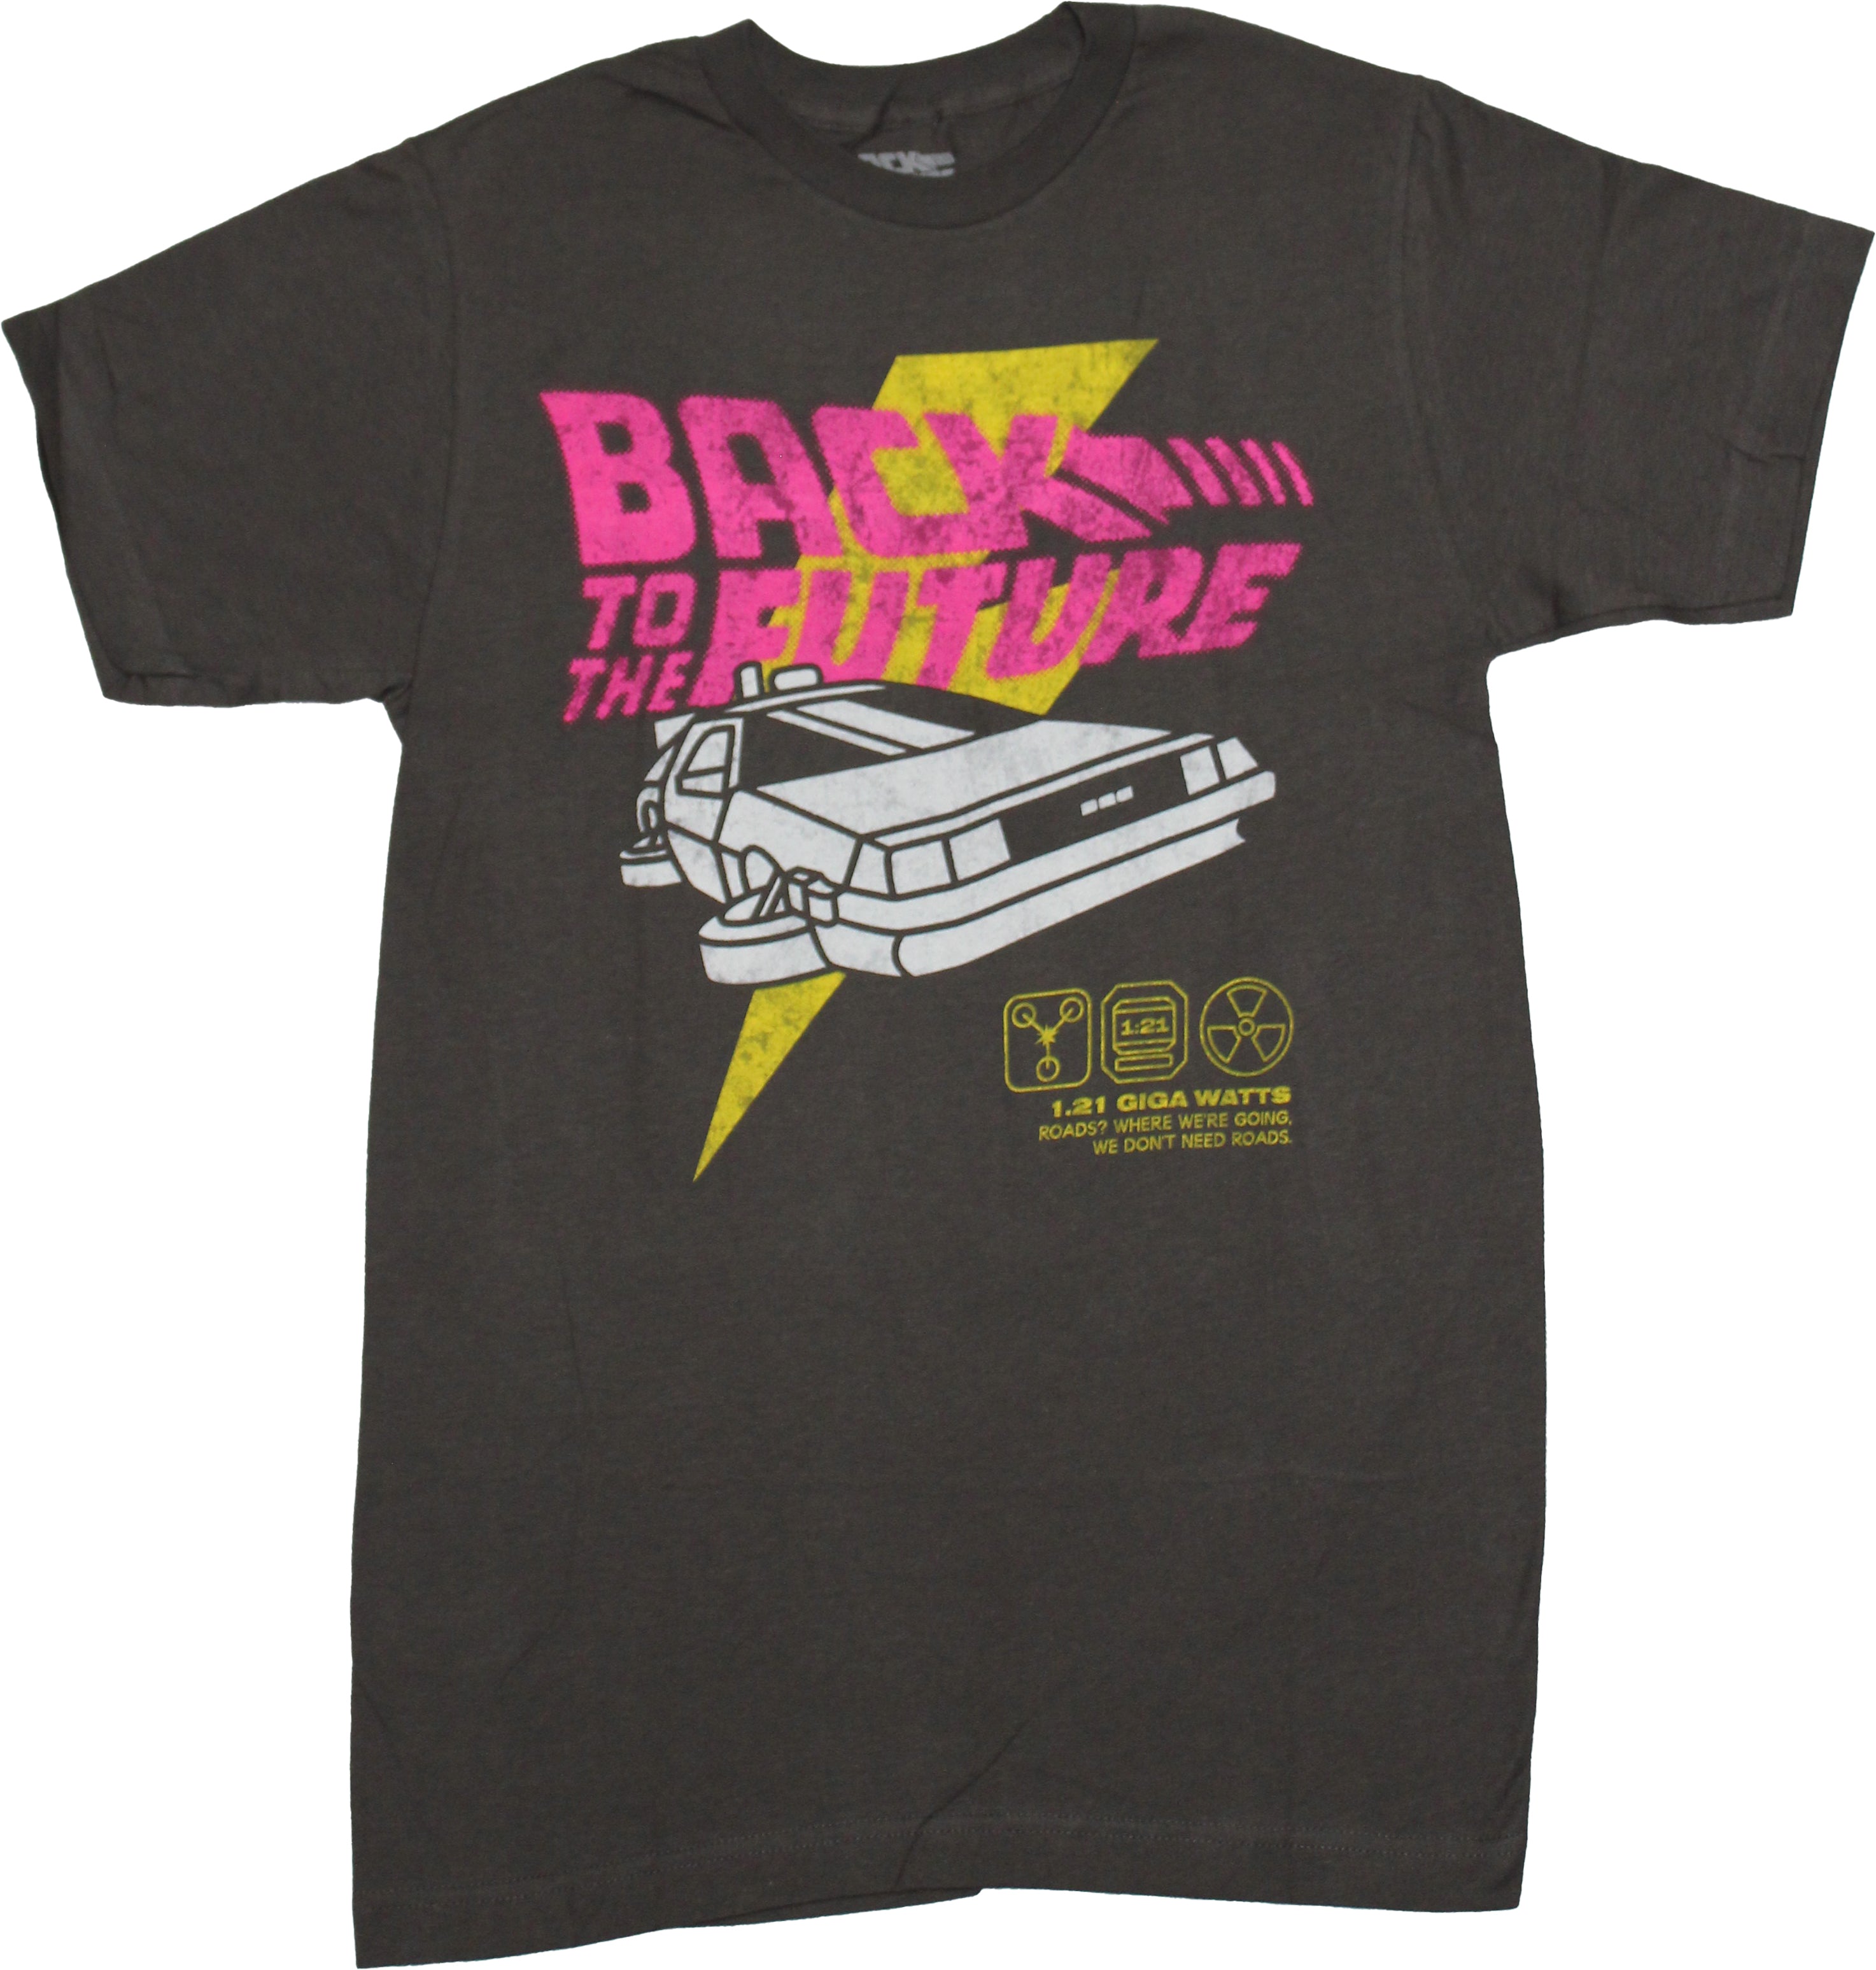 Back to the Future Mens T-Shirt - DeLorean 1.21 Giga Watts Bolt Design